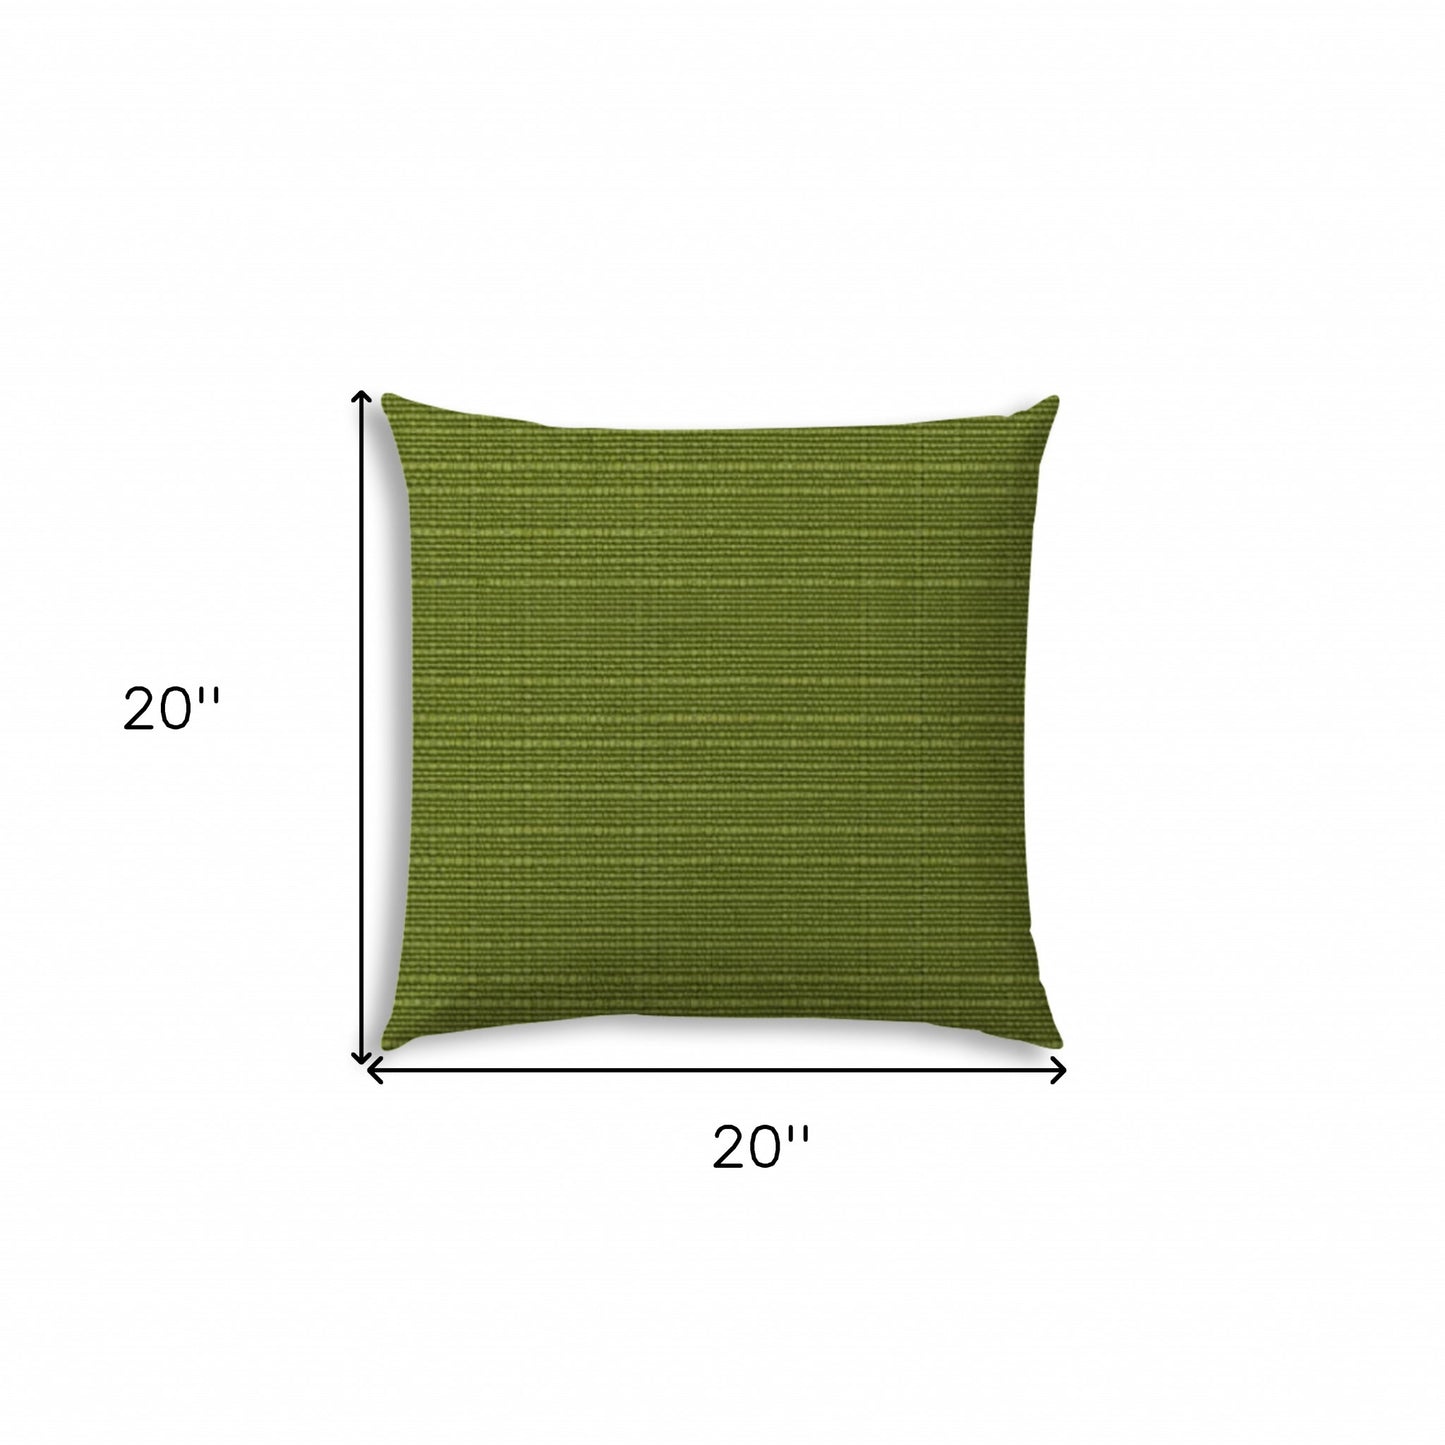 20" X 20" Kiwi Blown Seam Solid Color Throw Indoor Outdoor Pillow